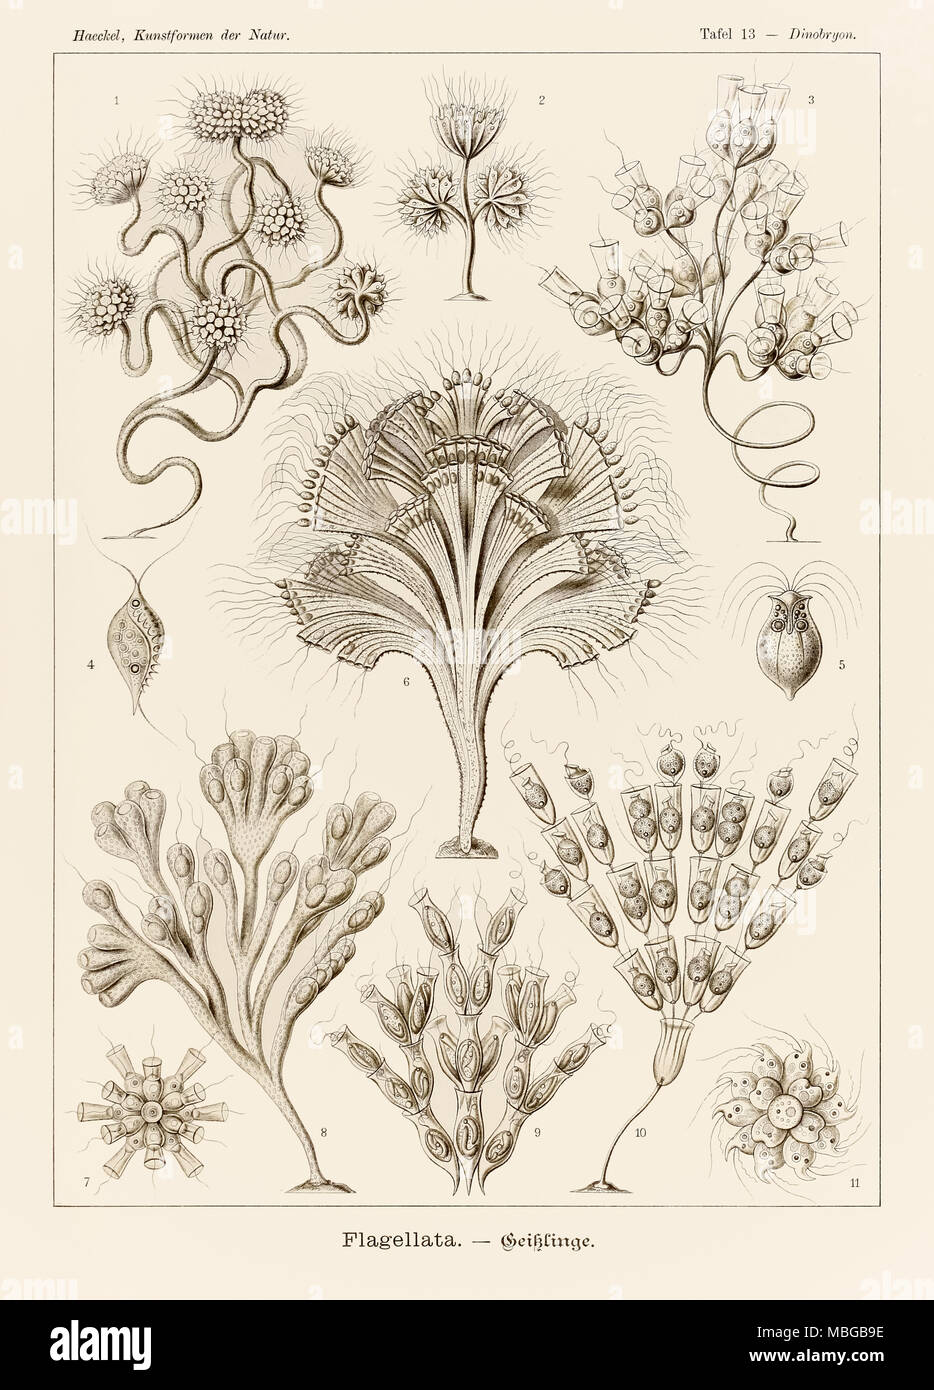 Plate 13 Dinobryon Flagellata from ‘Kunstformen der Natur’ (Art Forms in Nature) illustrated by Ernst Haeckel (1834-1919). See more information below. Stock Photo